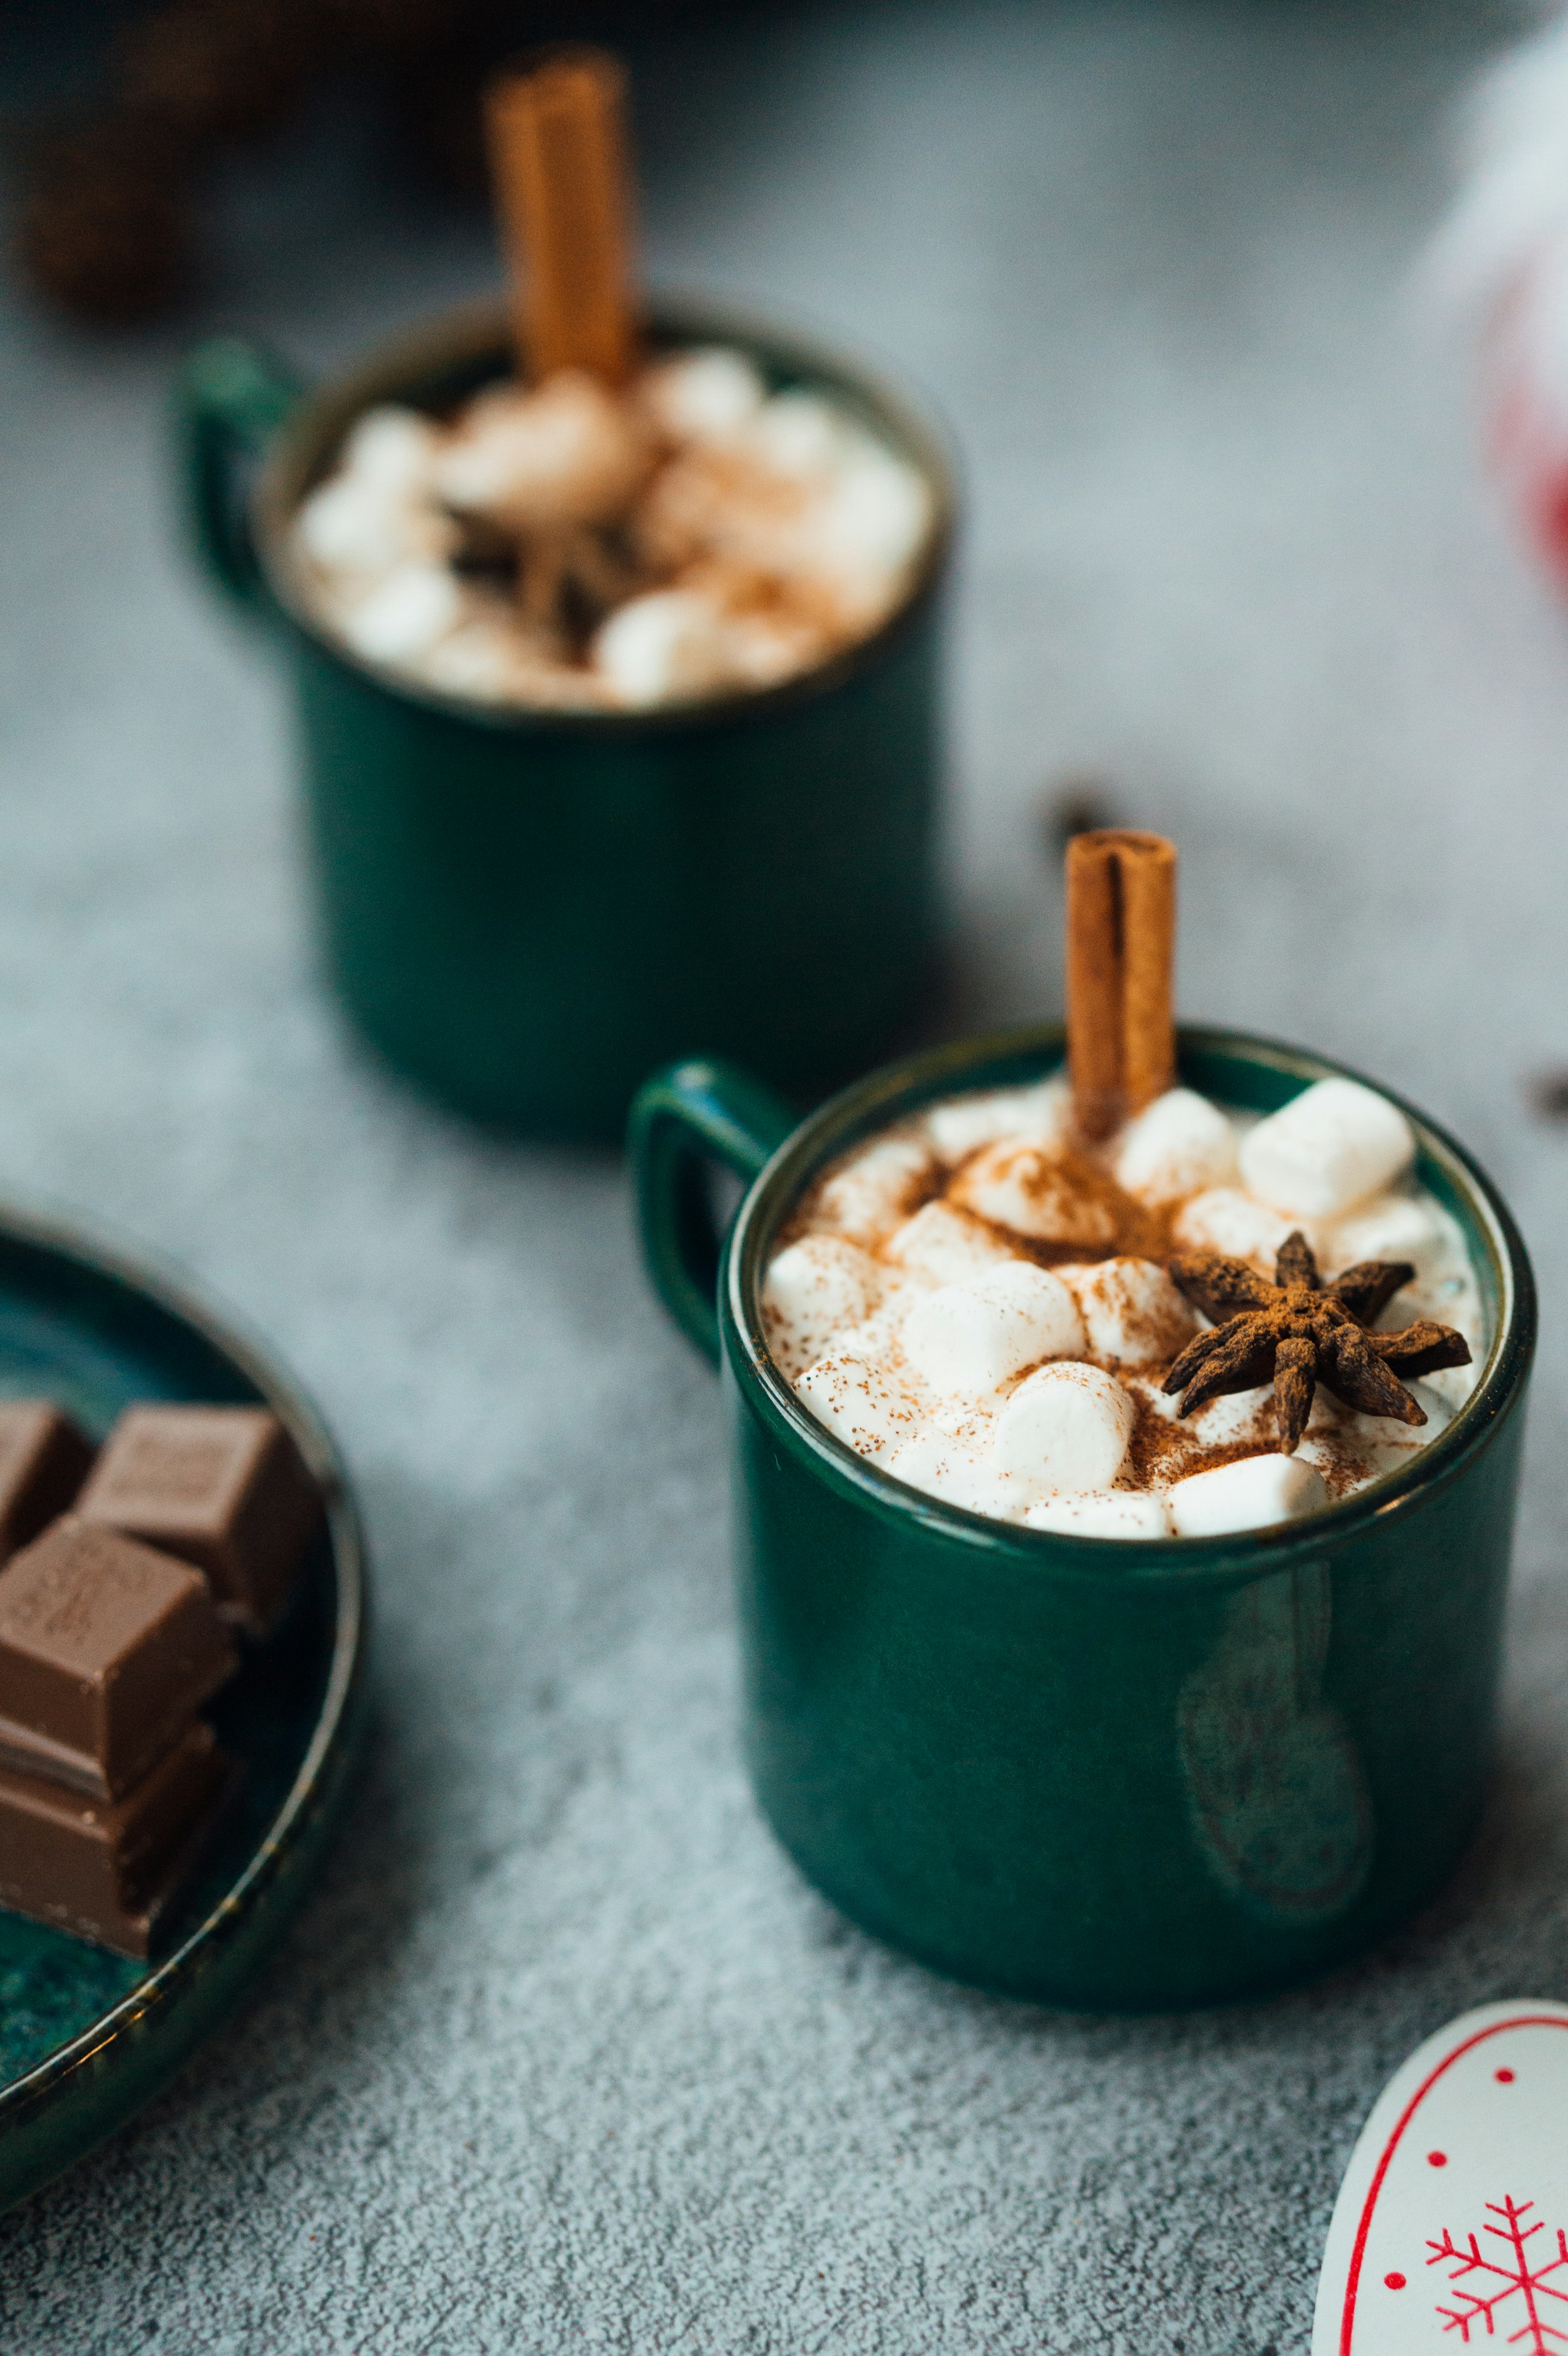 Two mugs of hot chocolate | Source: Unsplash